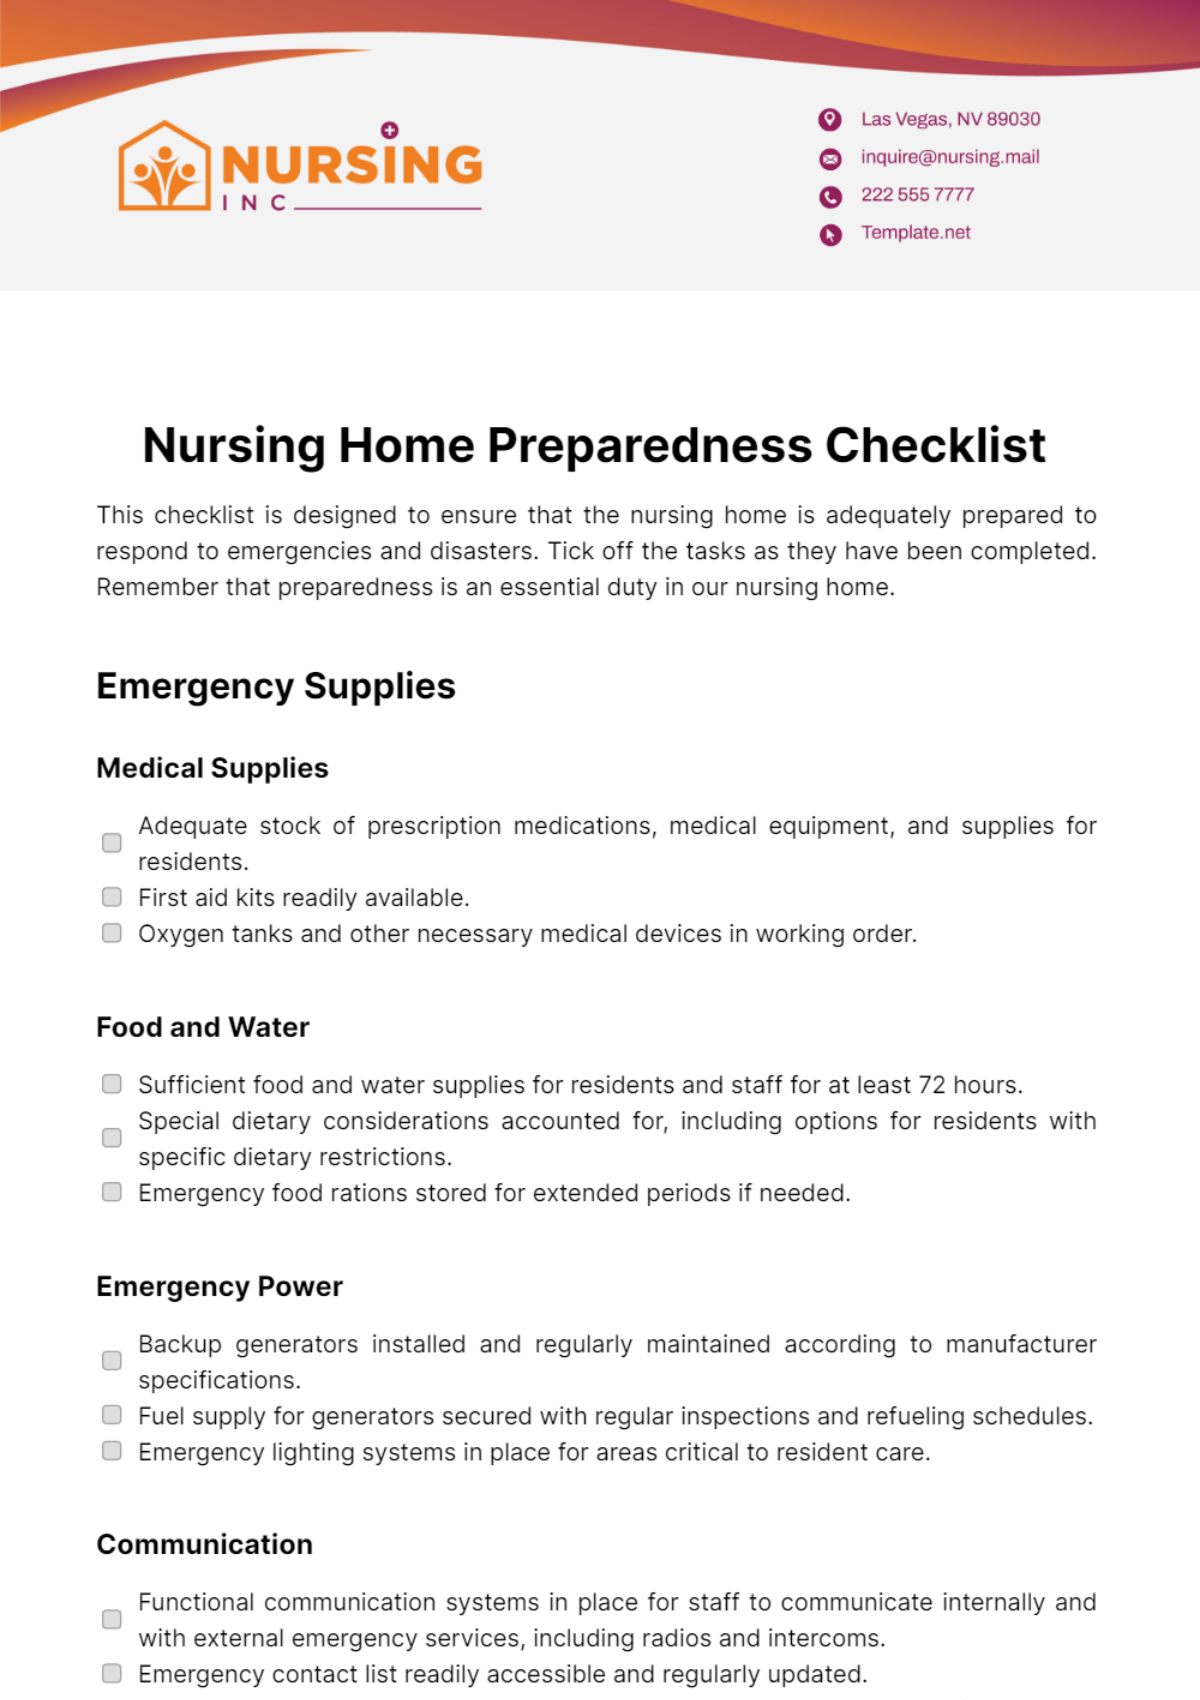 Nursing Home Preparedness Checklist Template